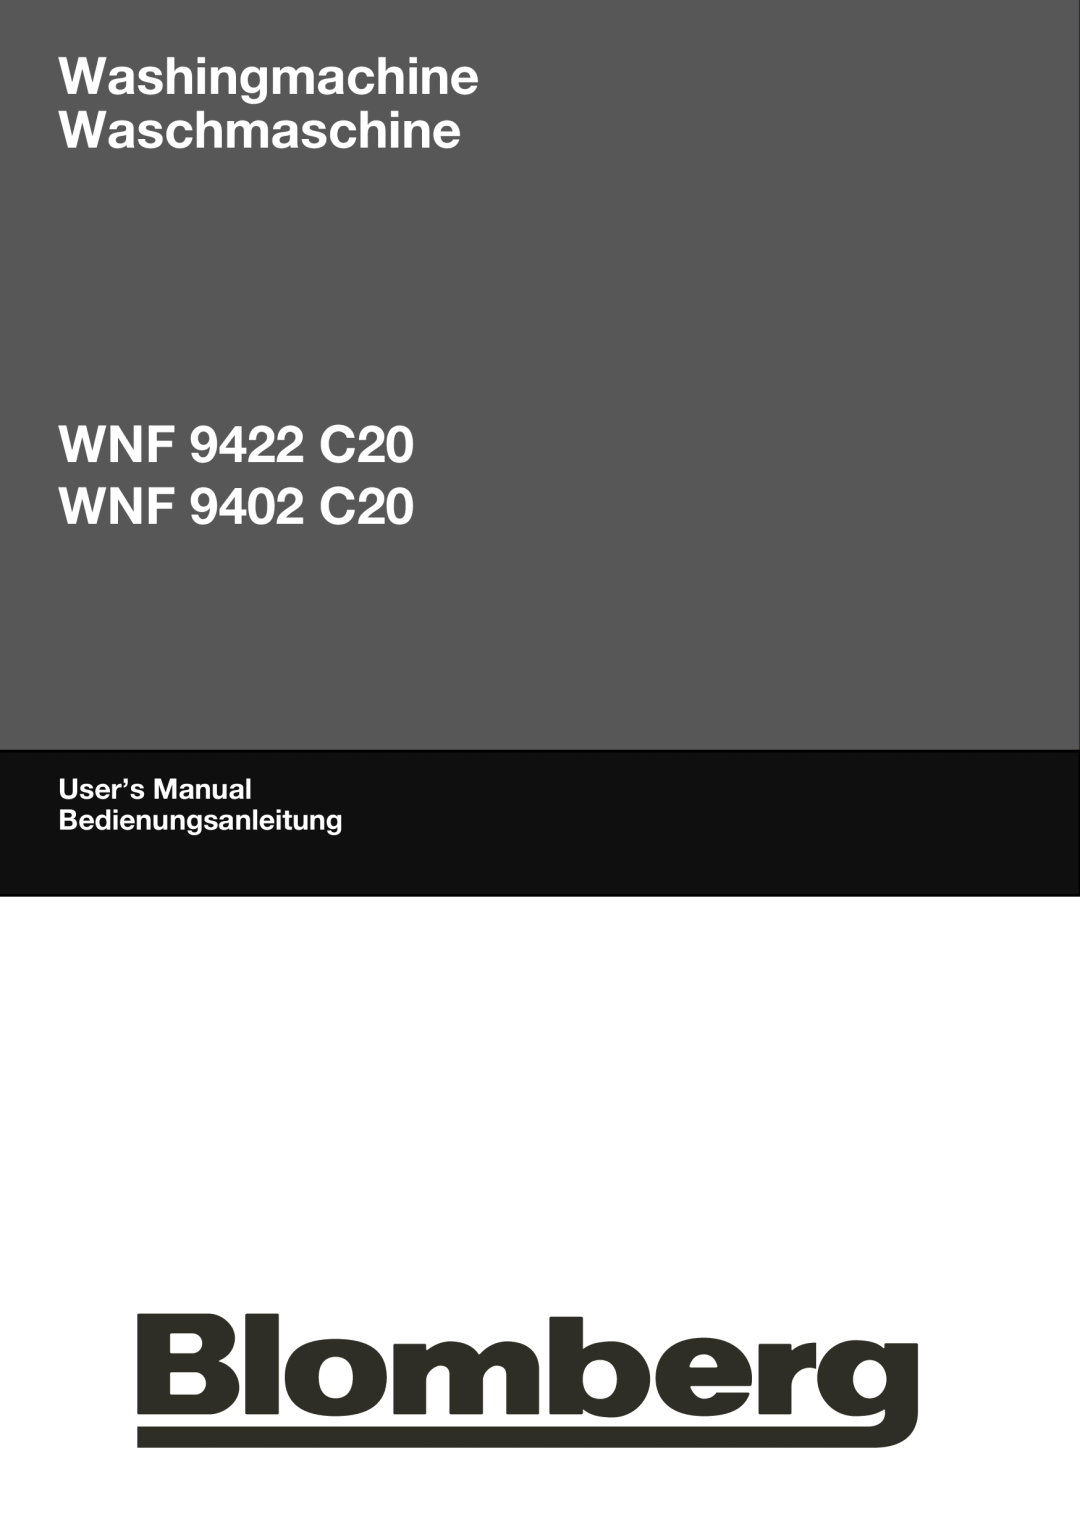 Blomberg user manual WNF 9422 C20 WNF 9402 C20, Washingmachine Waschmaschine, User’s Manual Bedienungsanleitung 